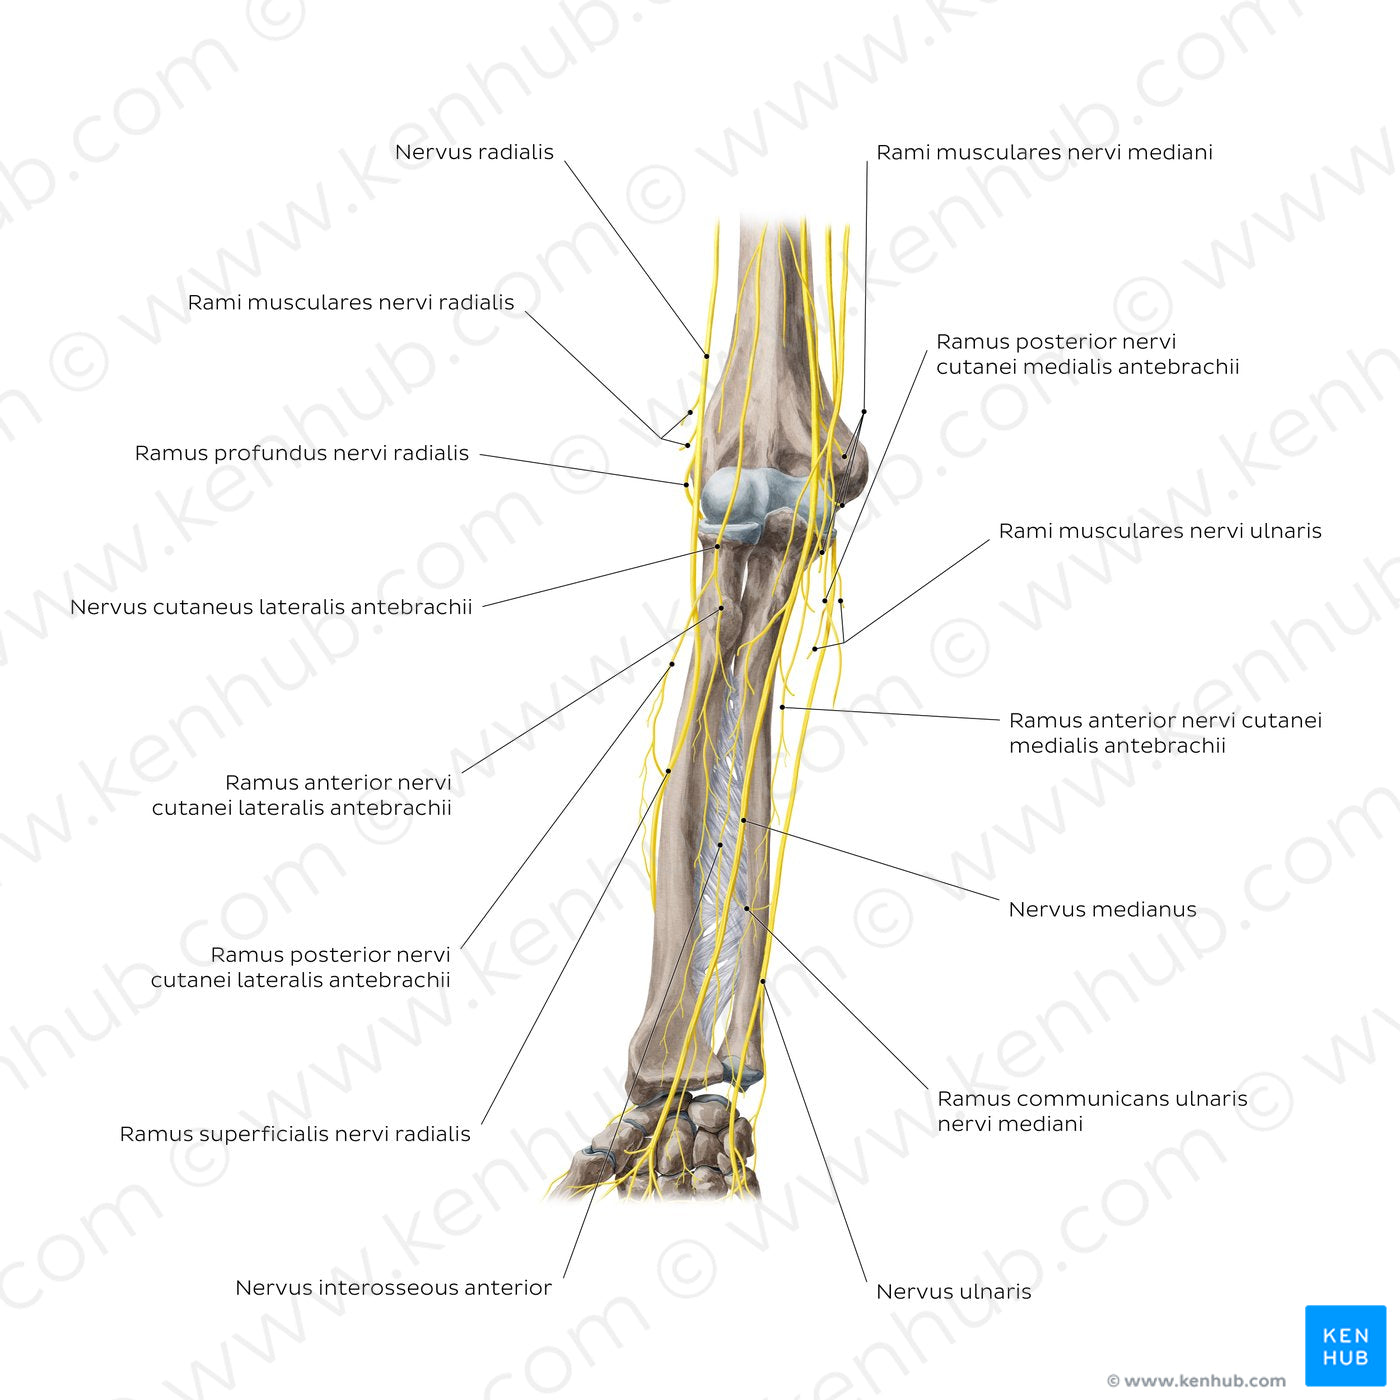 Nerves of the forearm: Anterior view (Latin)